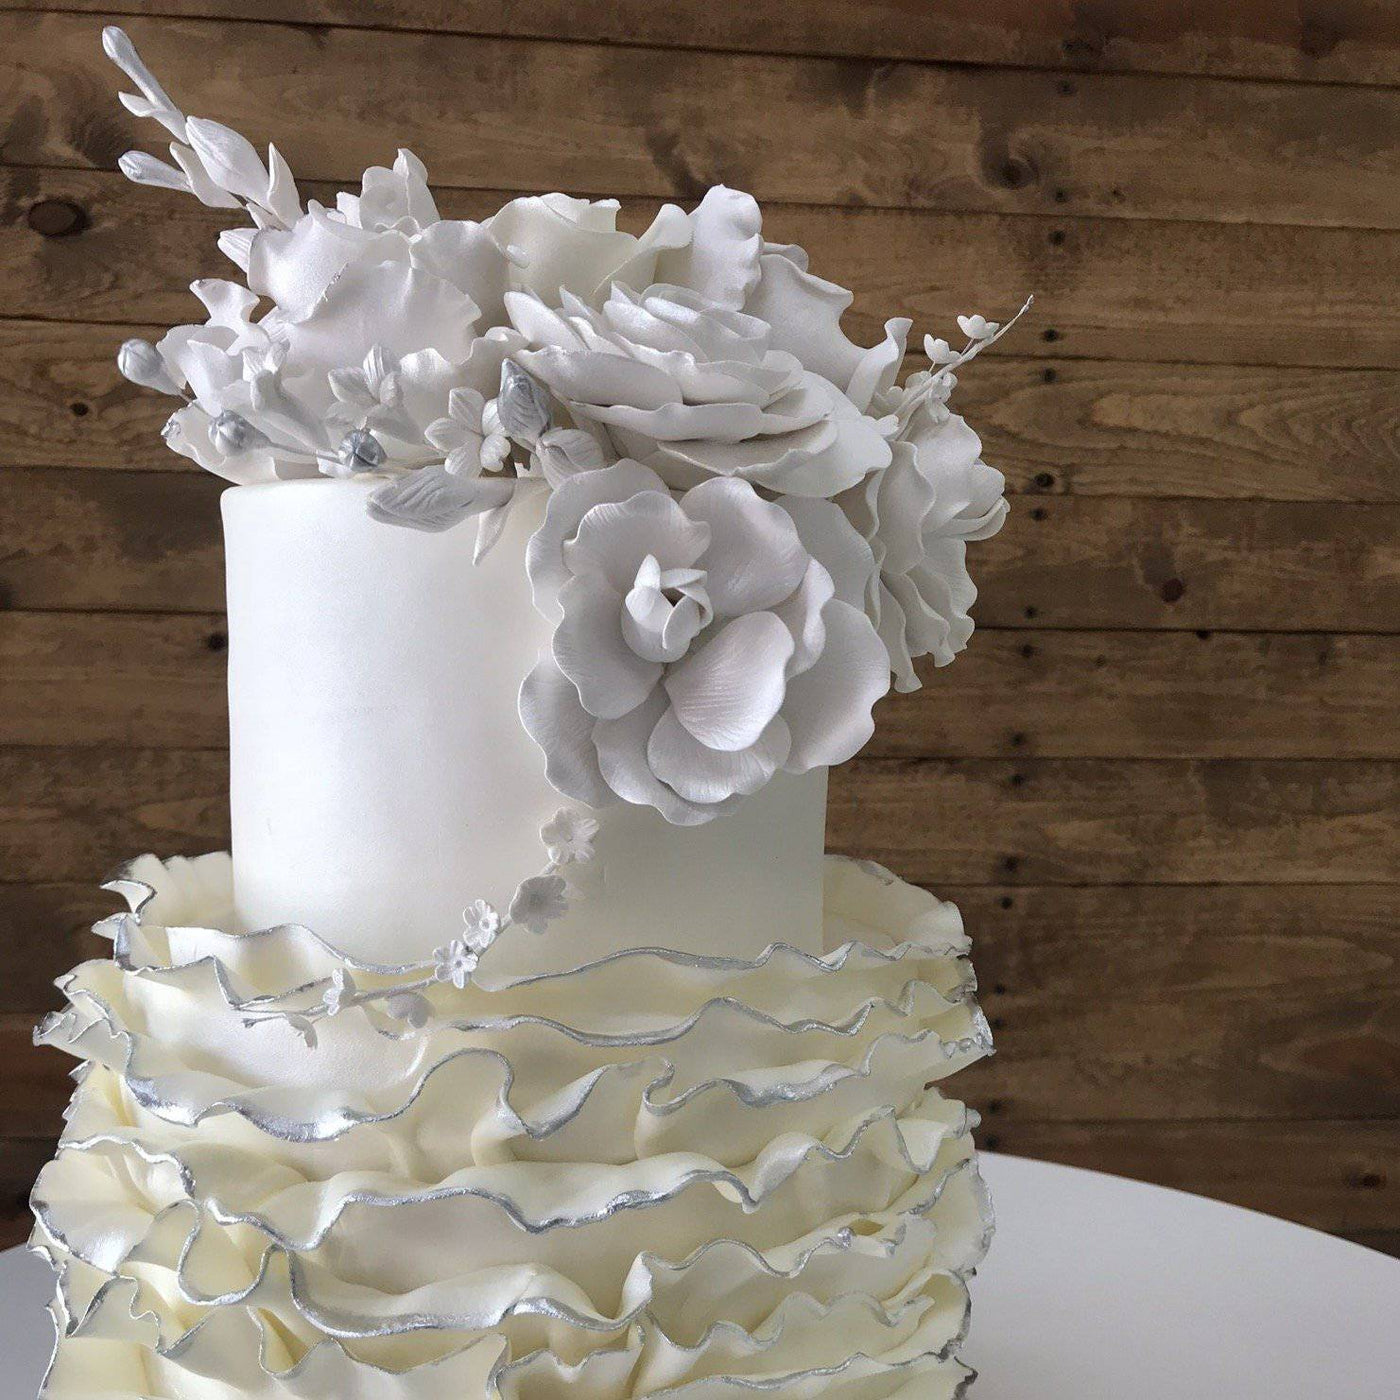 White Sugar Flowers Wedding Cake - Sweet E's Bake Shop - The Cake Shop